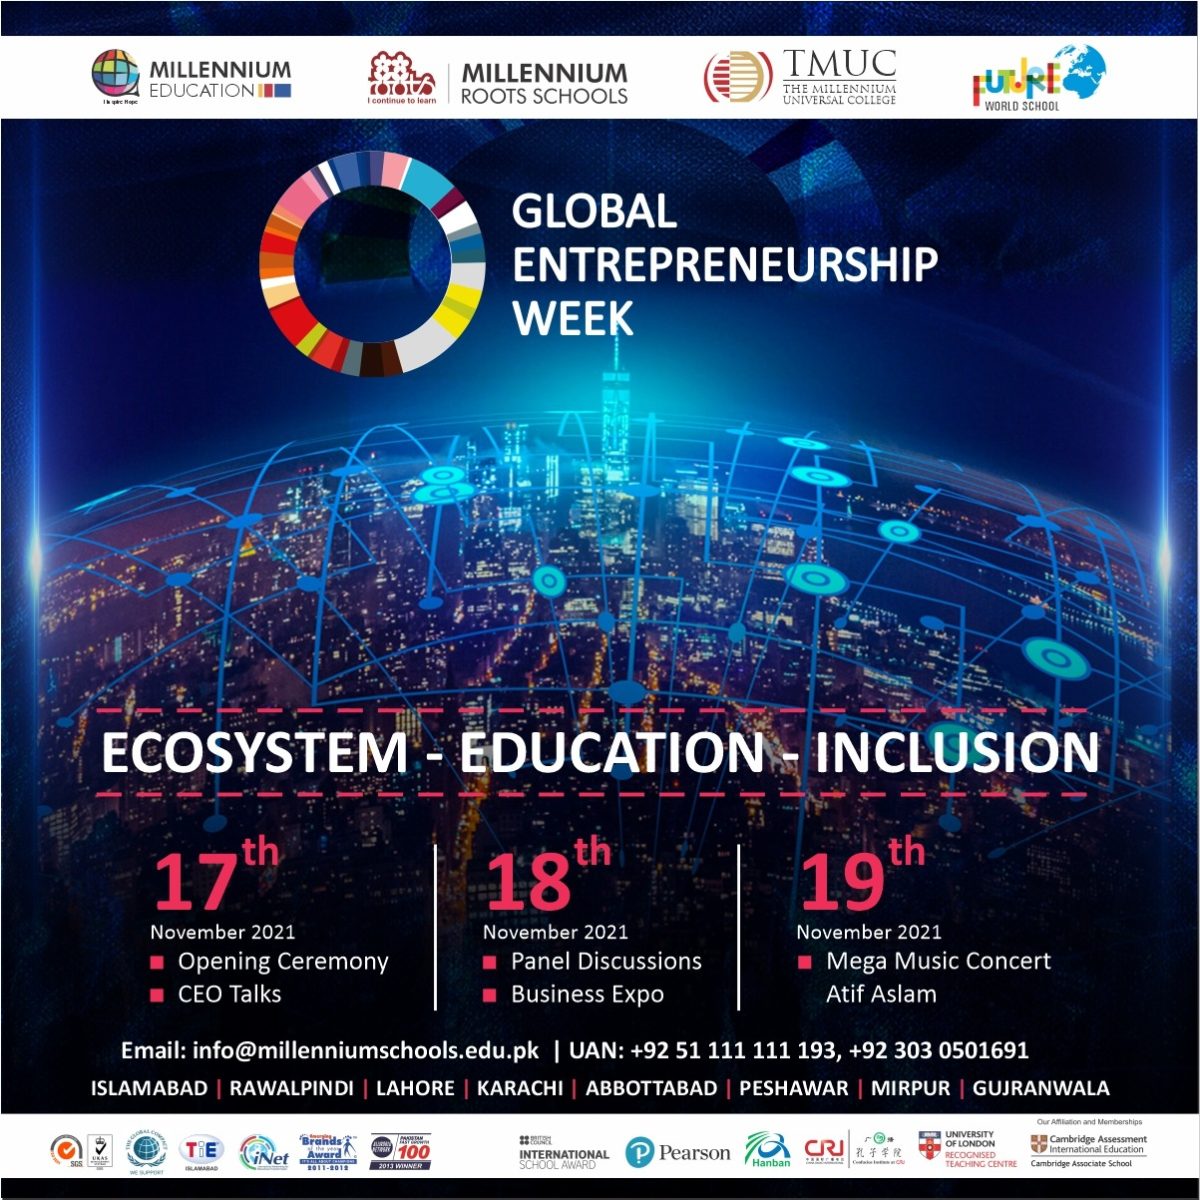 Millennial Global Entrepreneurship Week 2021 & Concert of Legend Atif Aslam